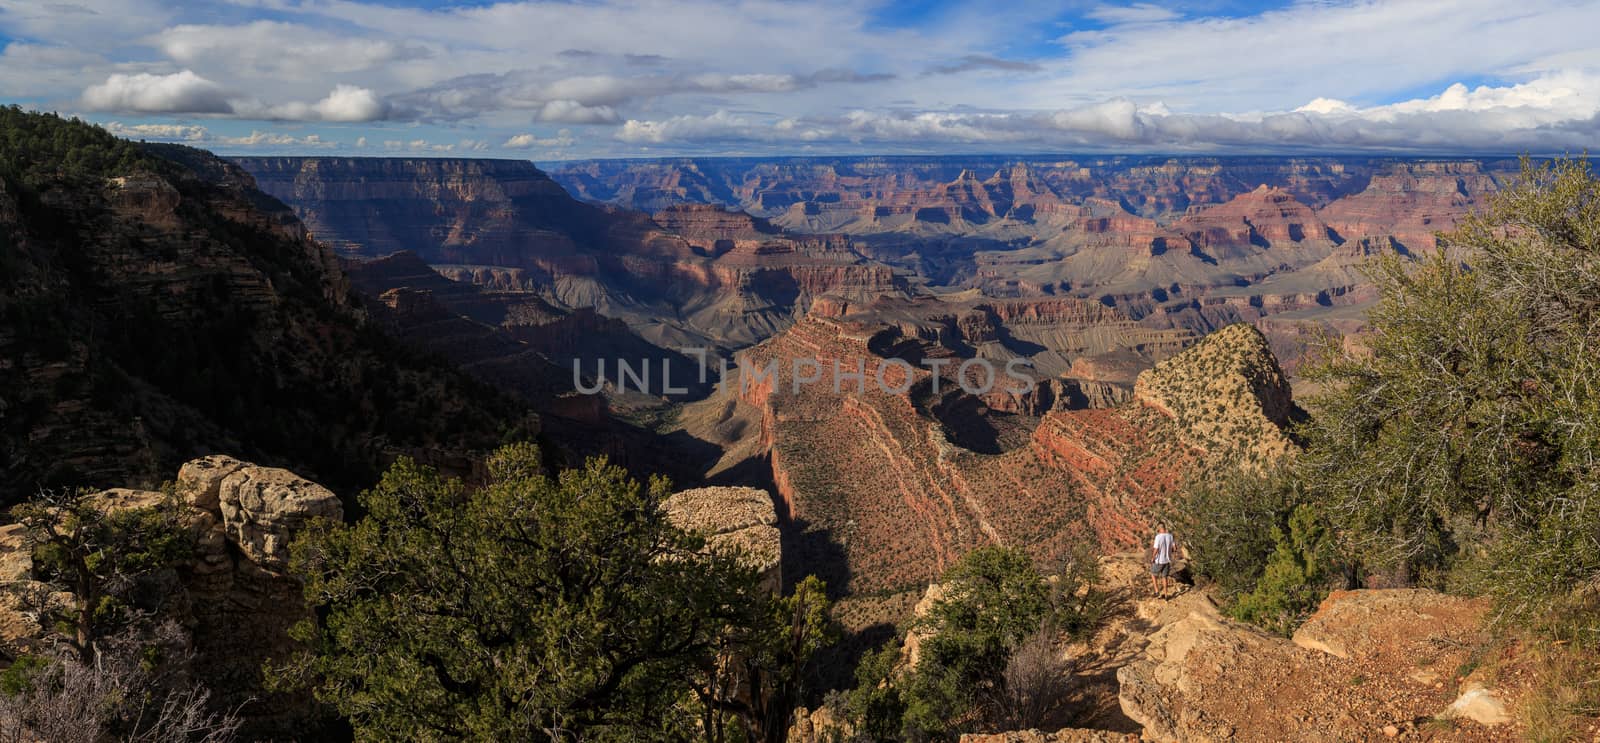 Beautiful Landscape from South Rim of Grand Canyon, Arizona, United States